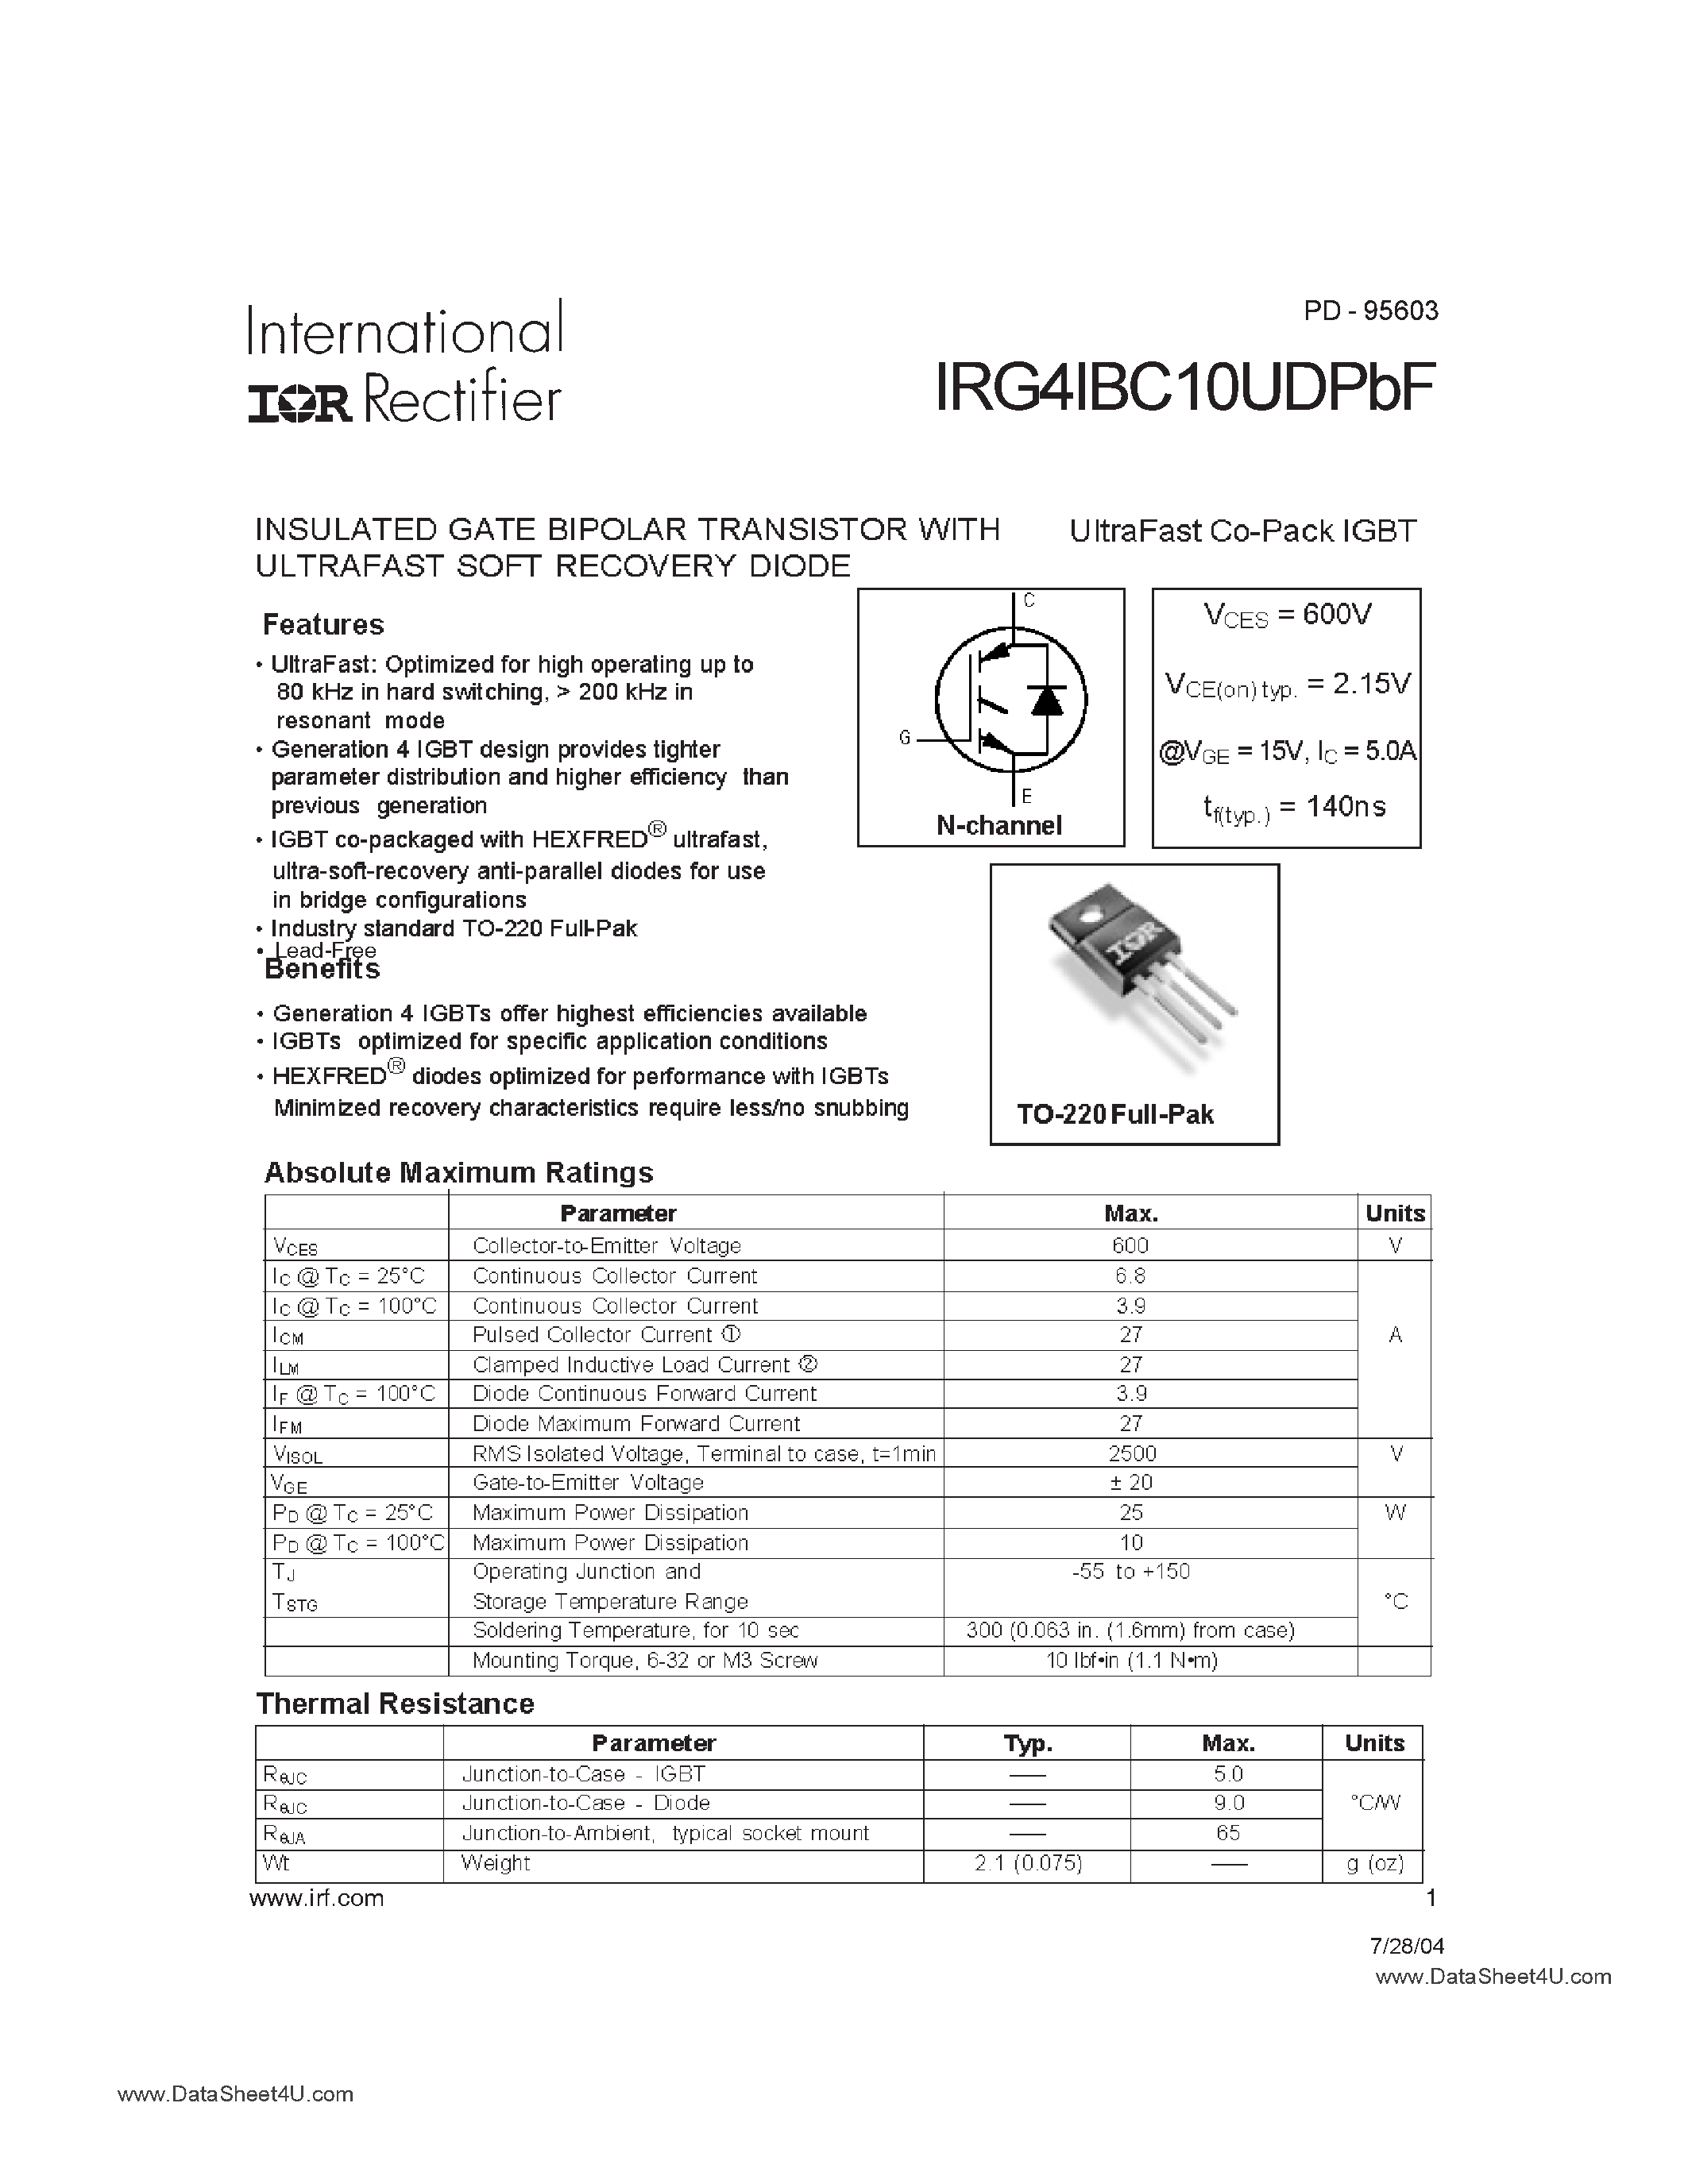 Datasheet IRG41BC10UDPBF - Insulated Gate Bipolar Transistor page 1